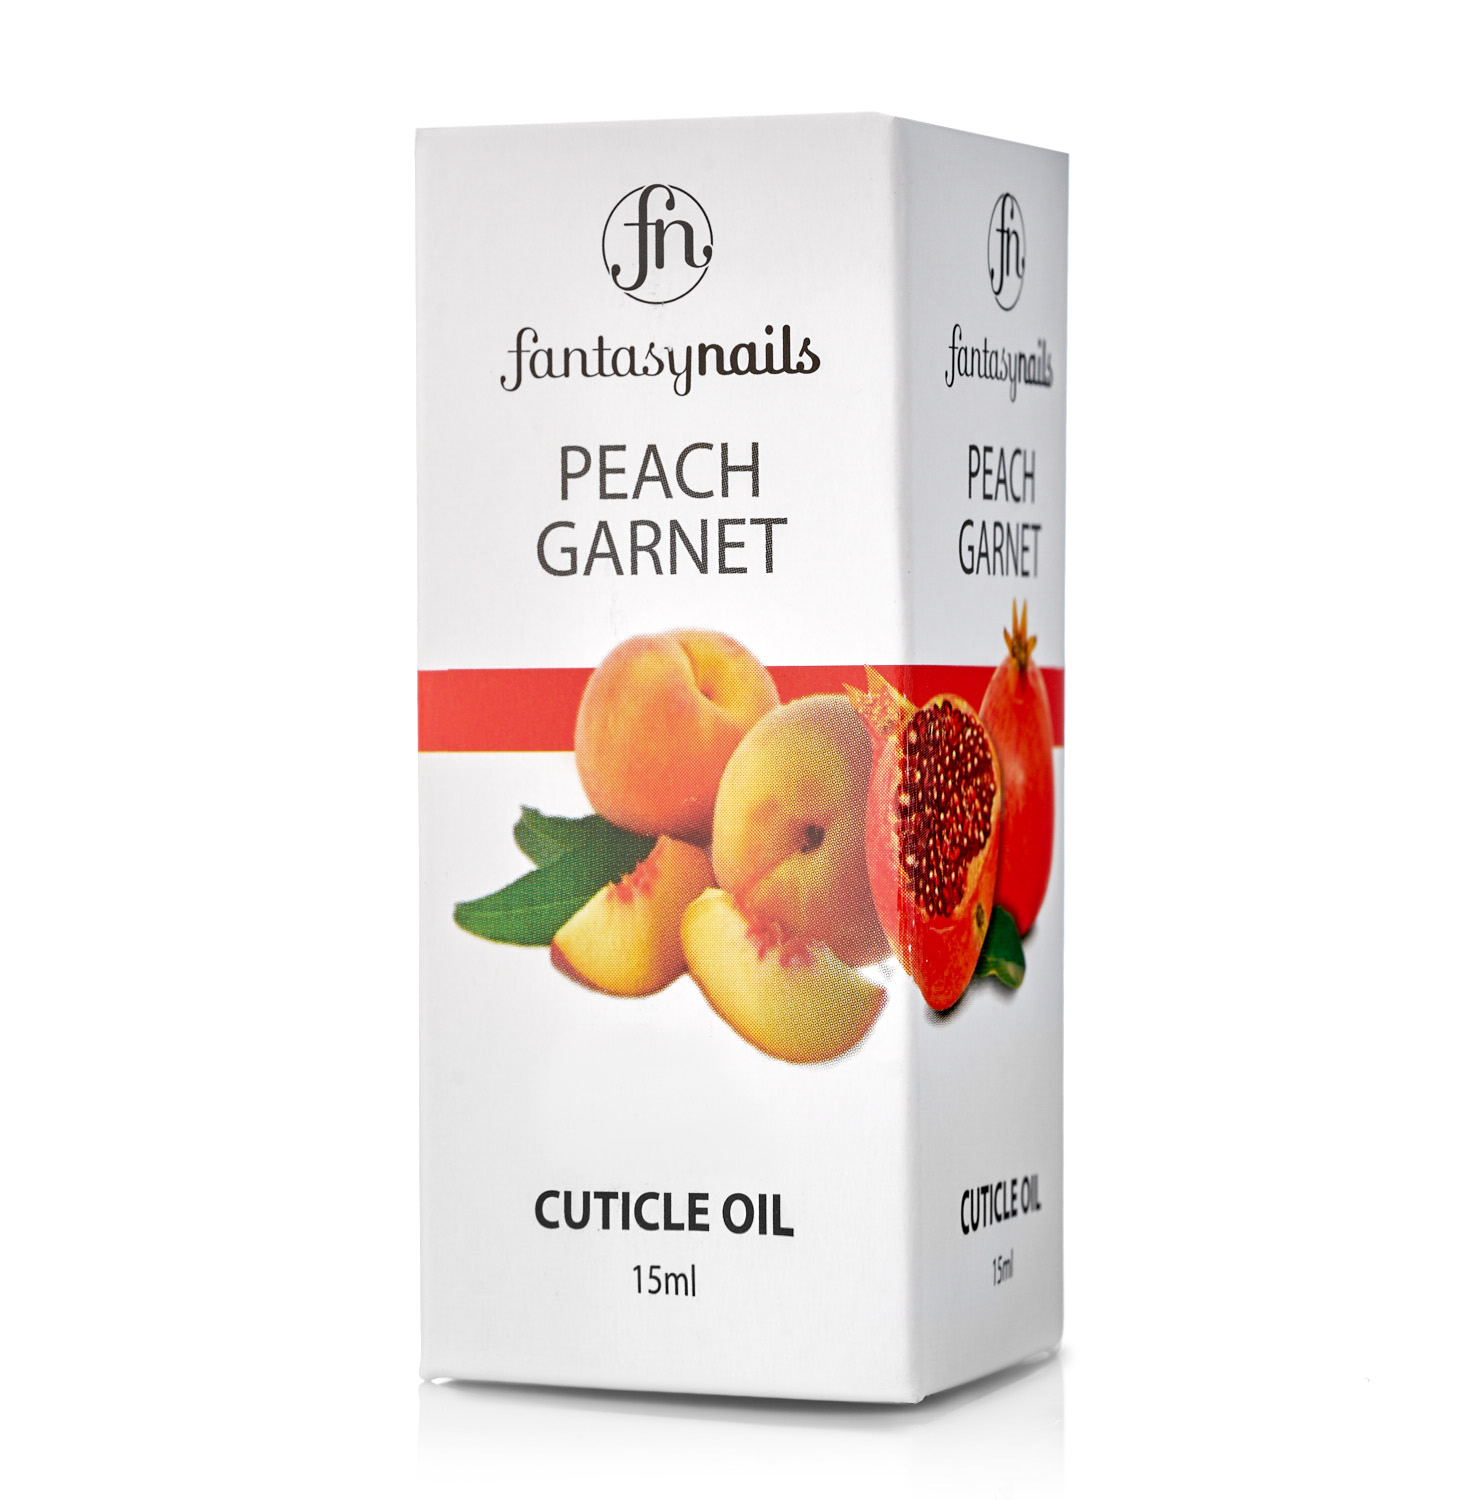 Масло для кутикулы Peach/Garnet («Персик и гранат») 15 ml из каталога Препараты для ногтей в интернет-магазине BPW.style